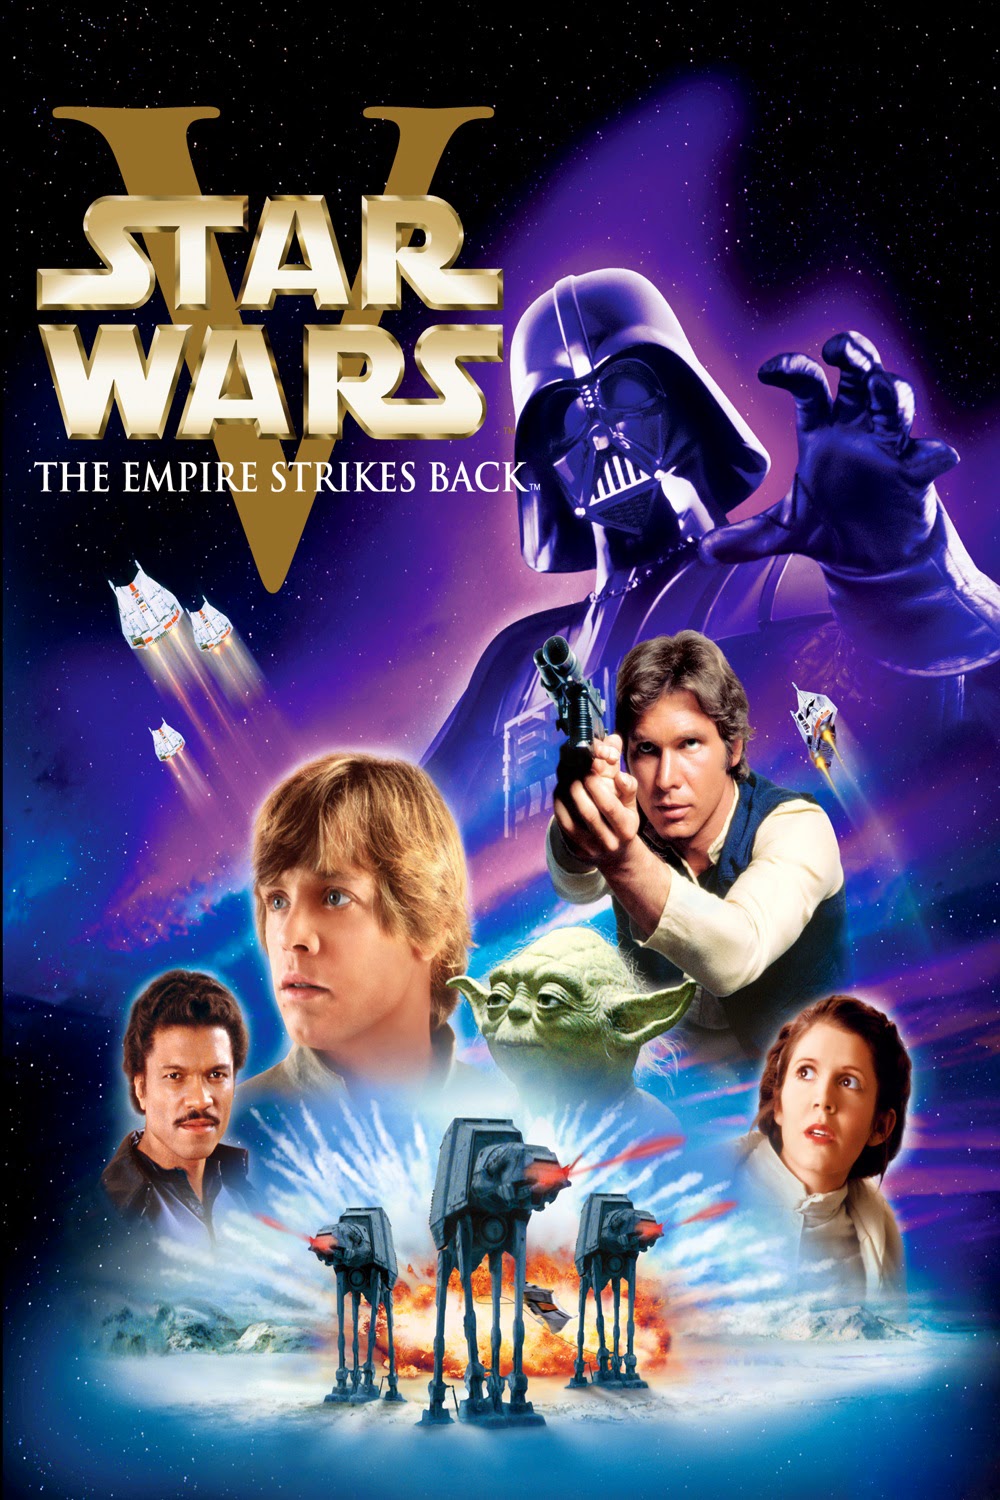 Mr. Movie Star Wars 5 The Empire Strikes Back (1980